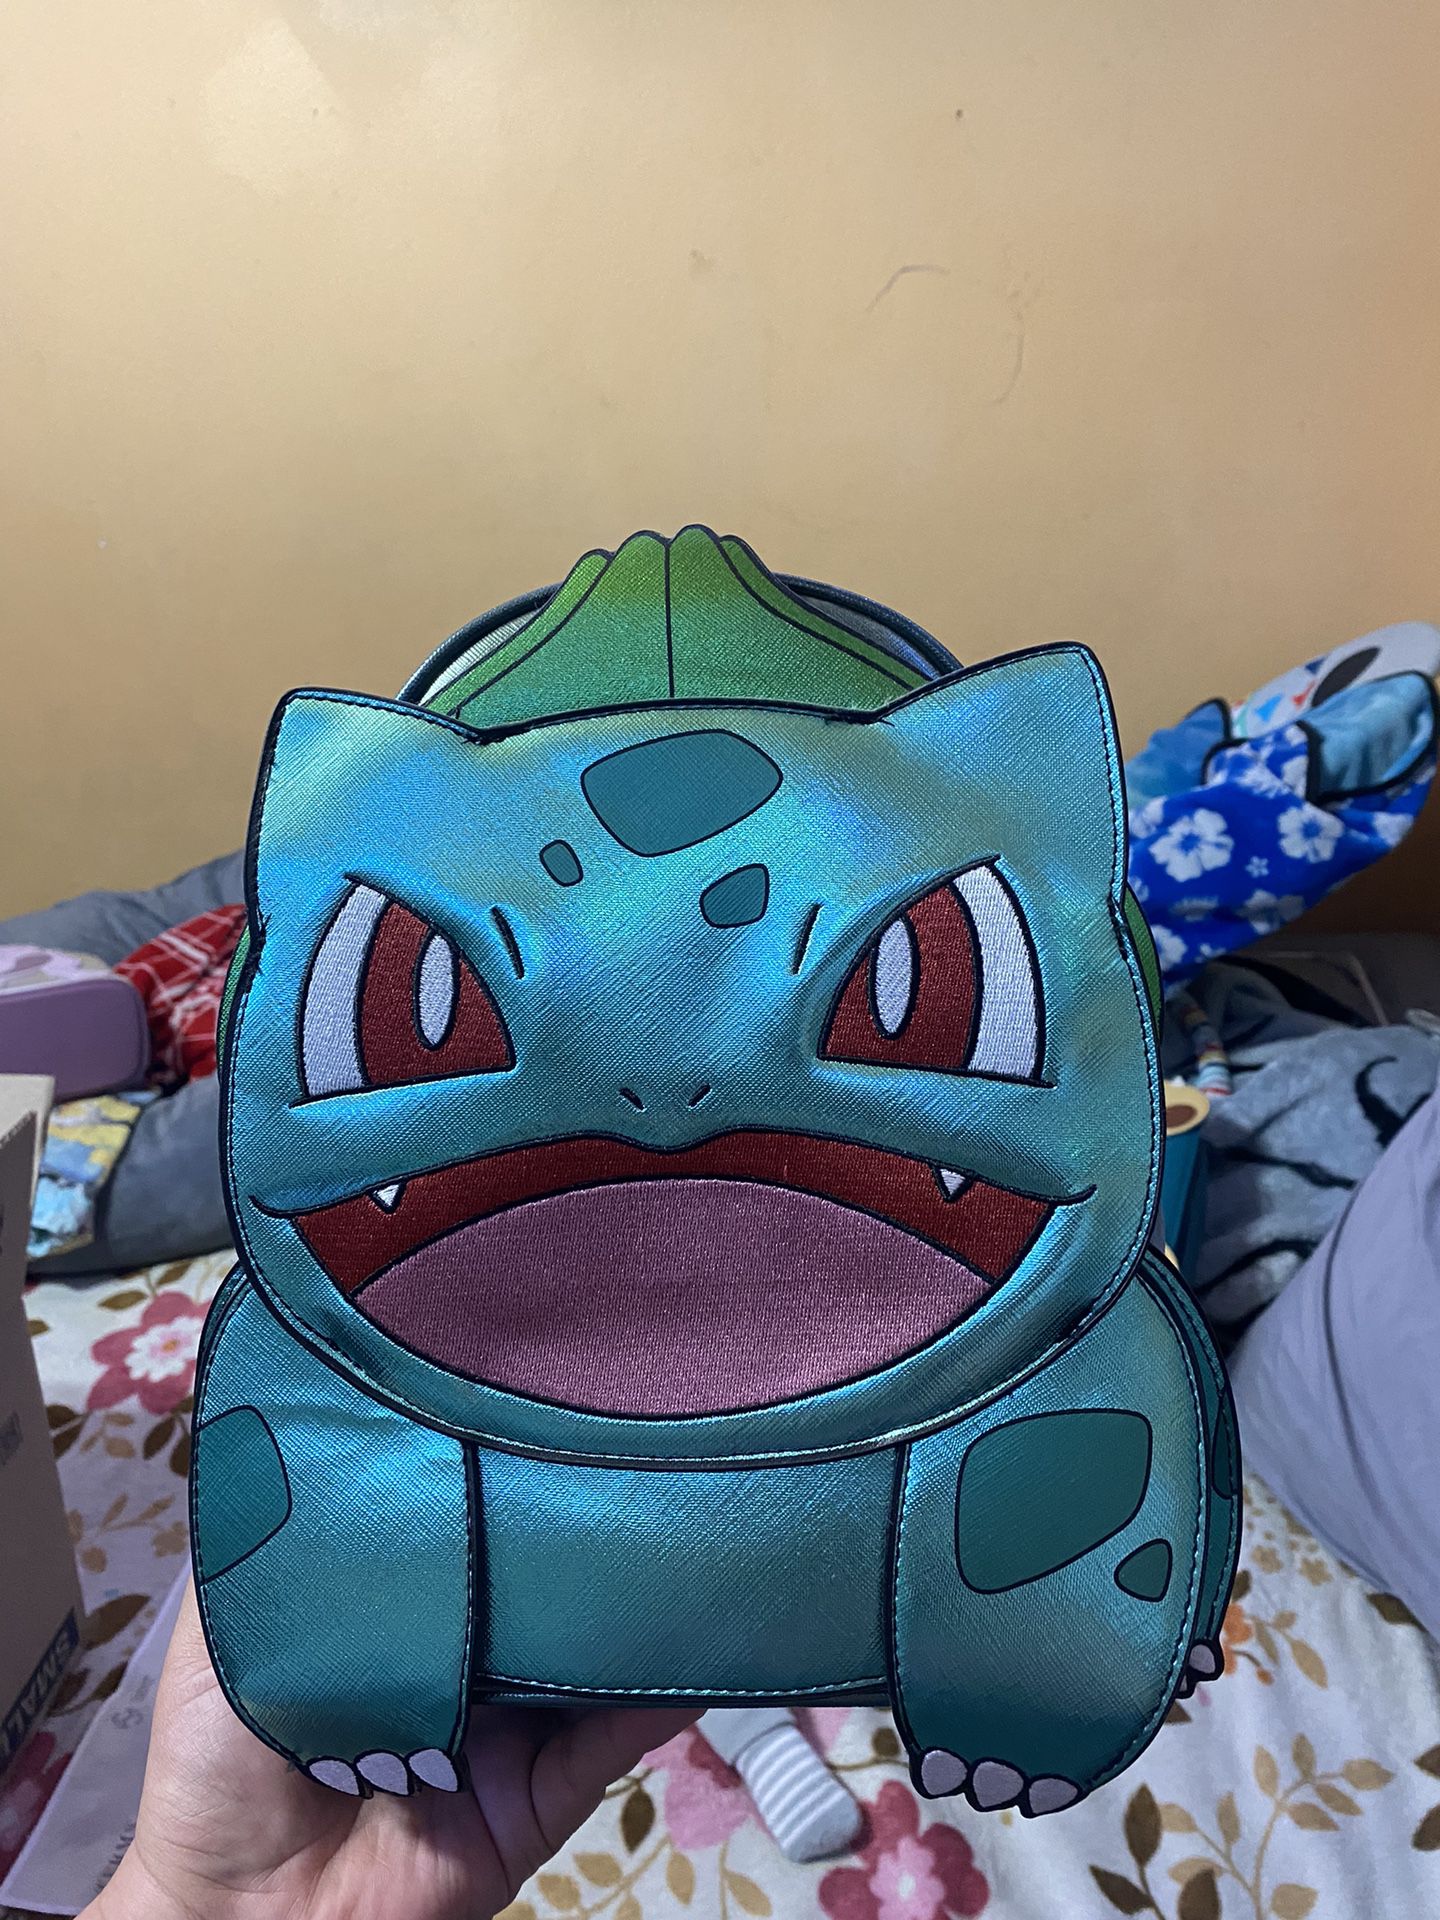 Pokemon Backpack 